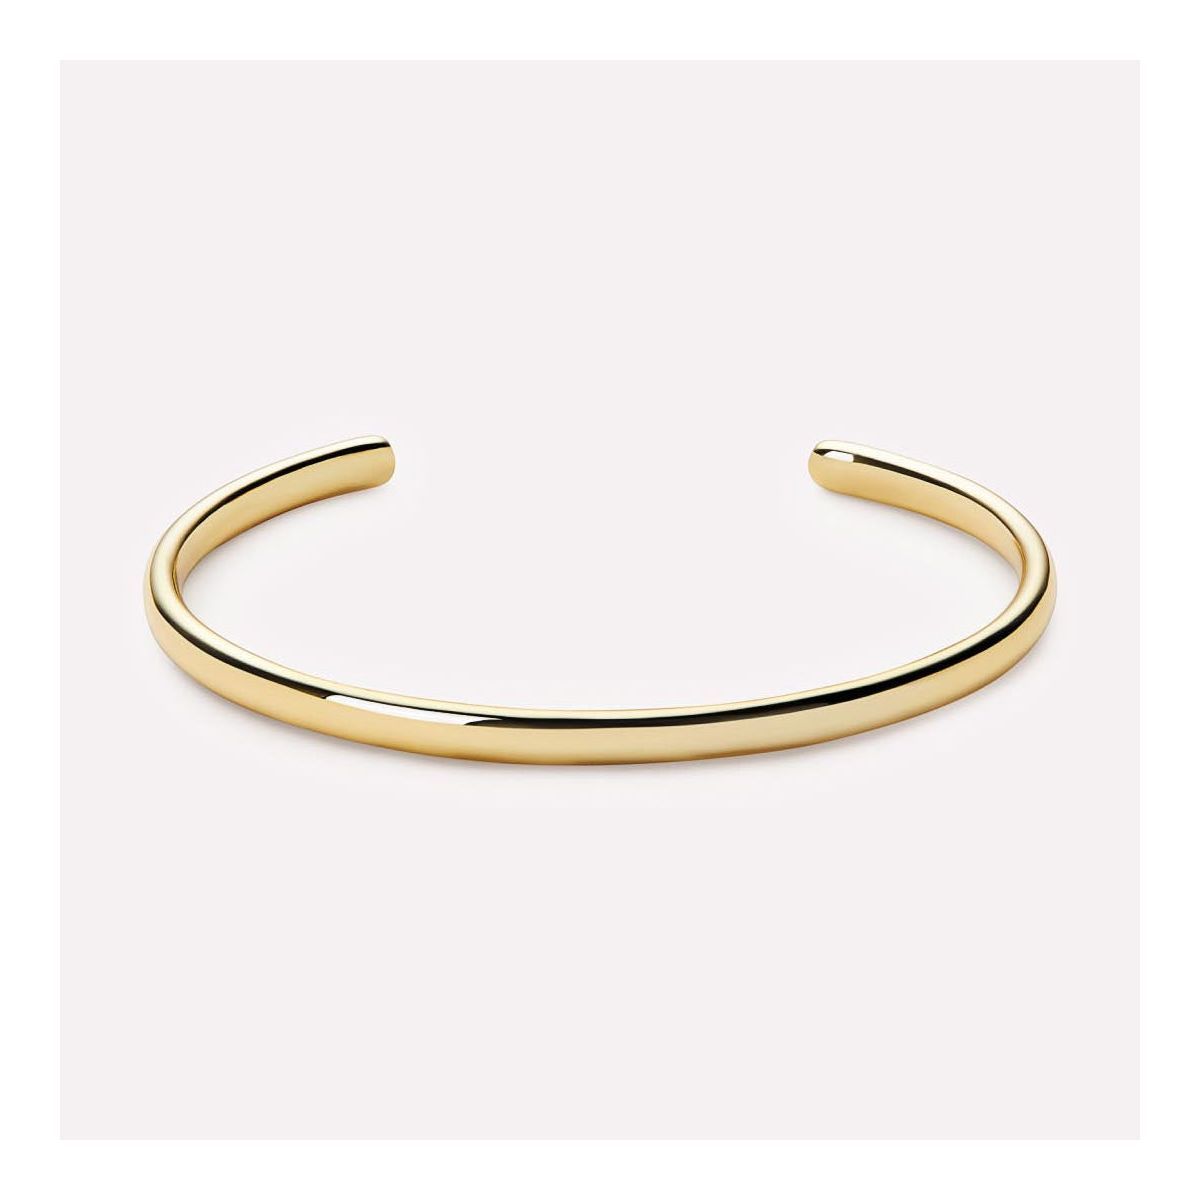 Ana Luisa - Bangle Bracelet  - Arlo, Target Jewelry, Summer OOTD, Beach Jewelry, Gold Bracelet  | Target